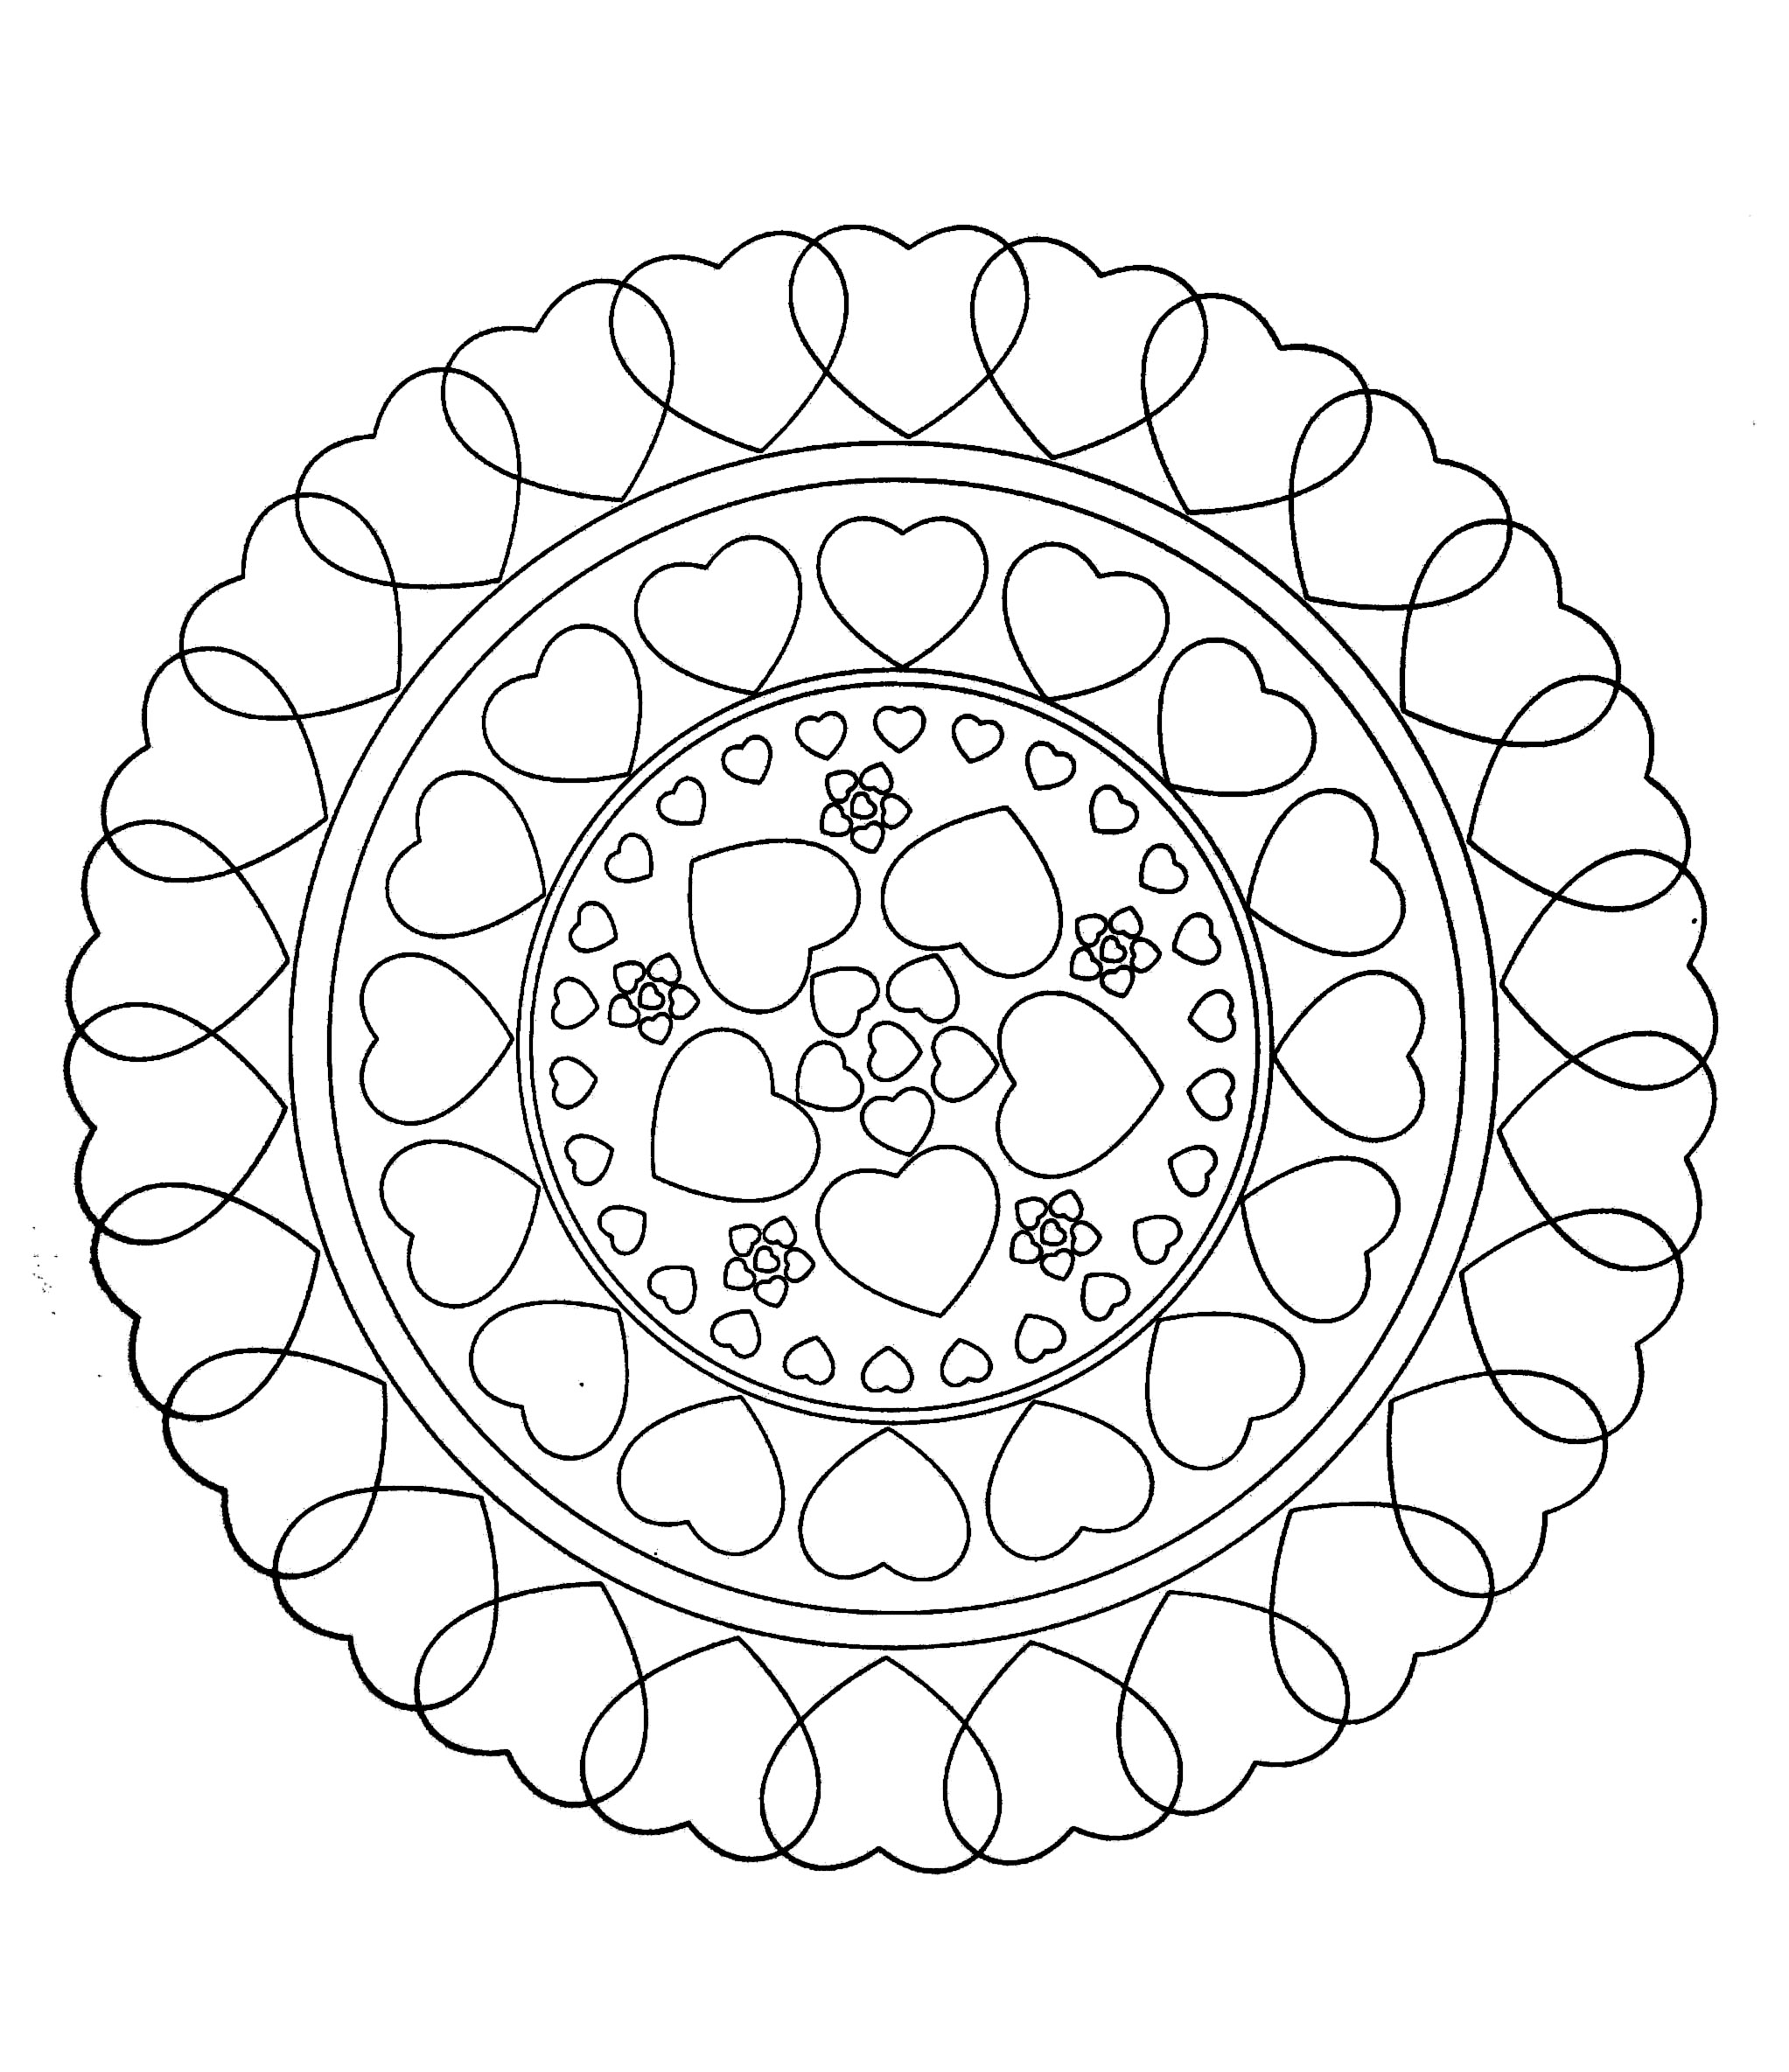 Mandala to color free to print - 16